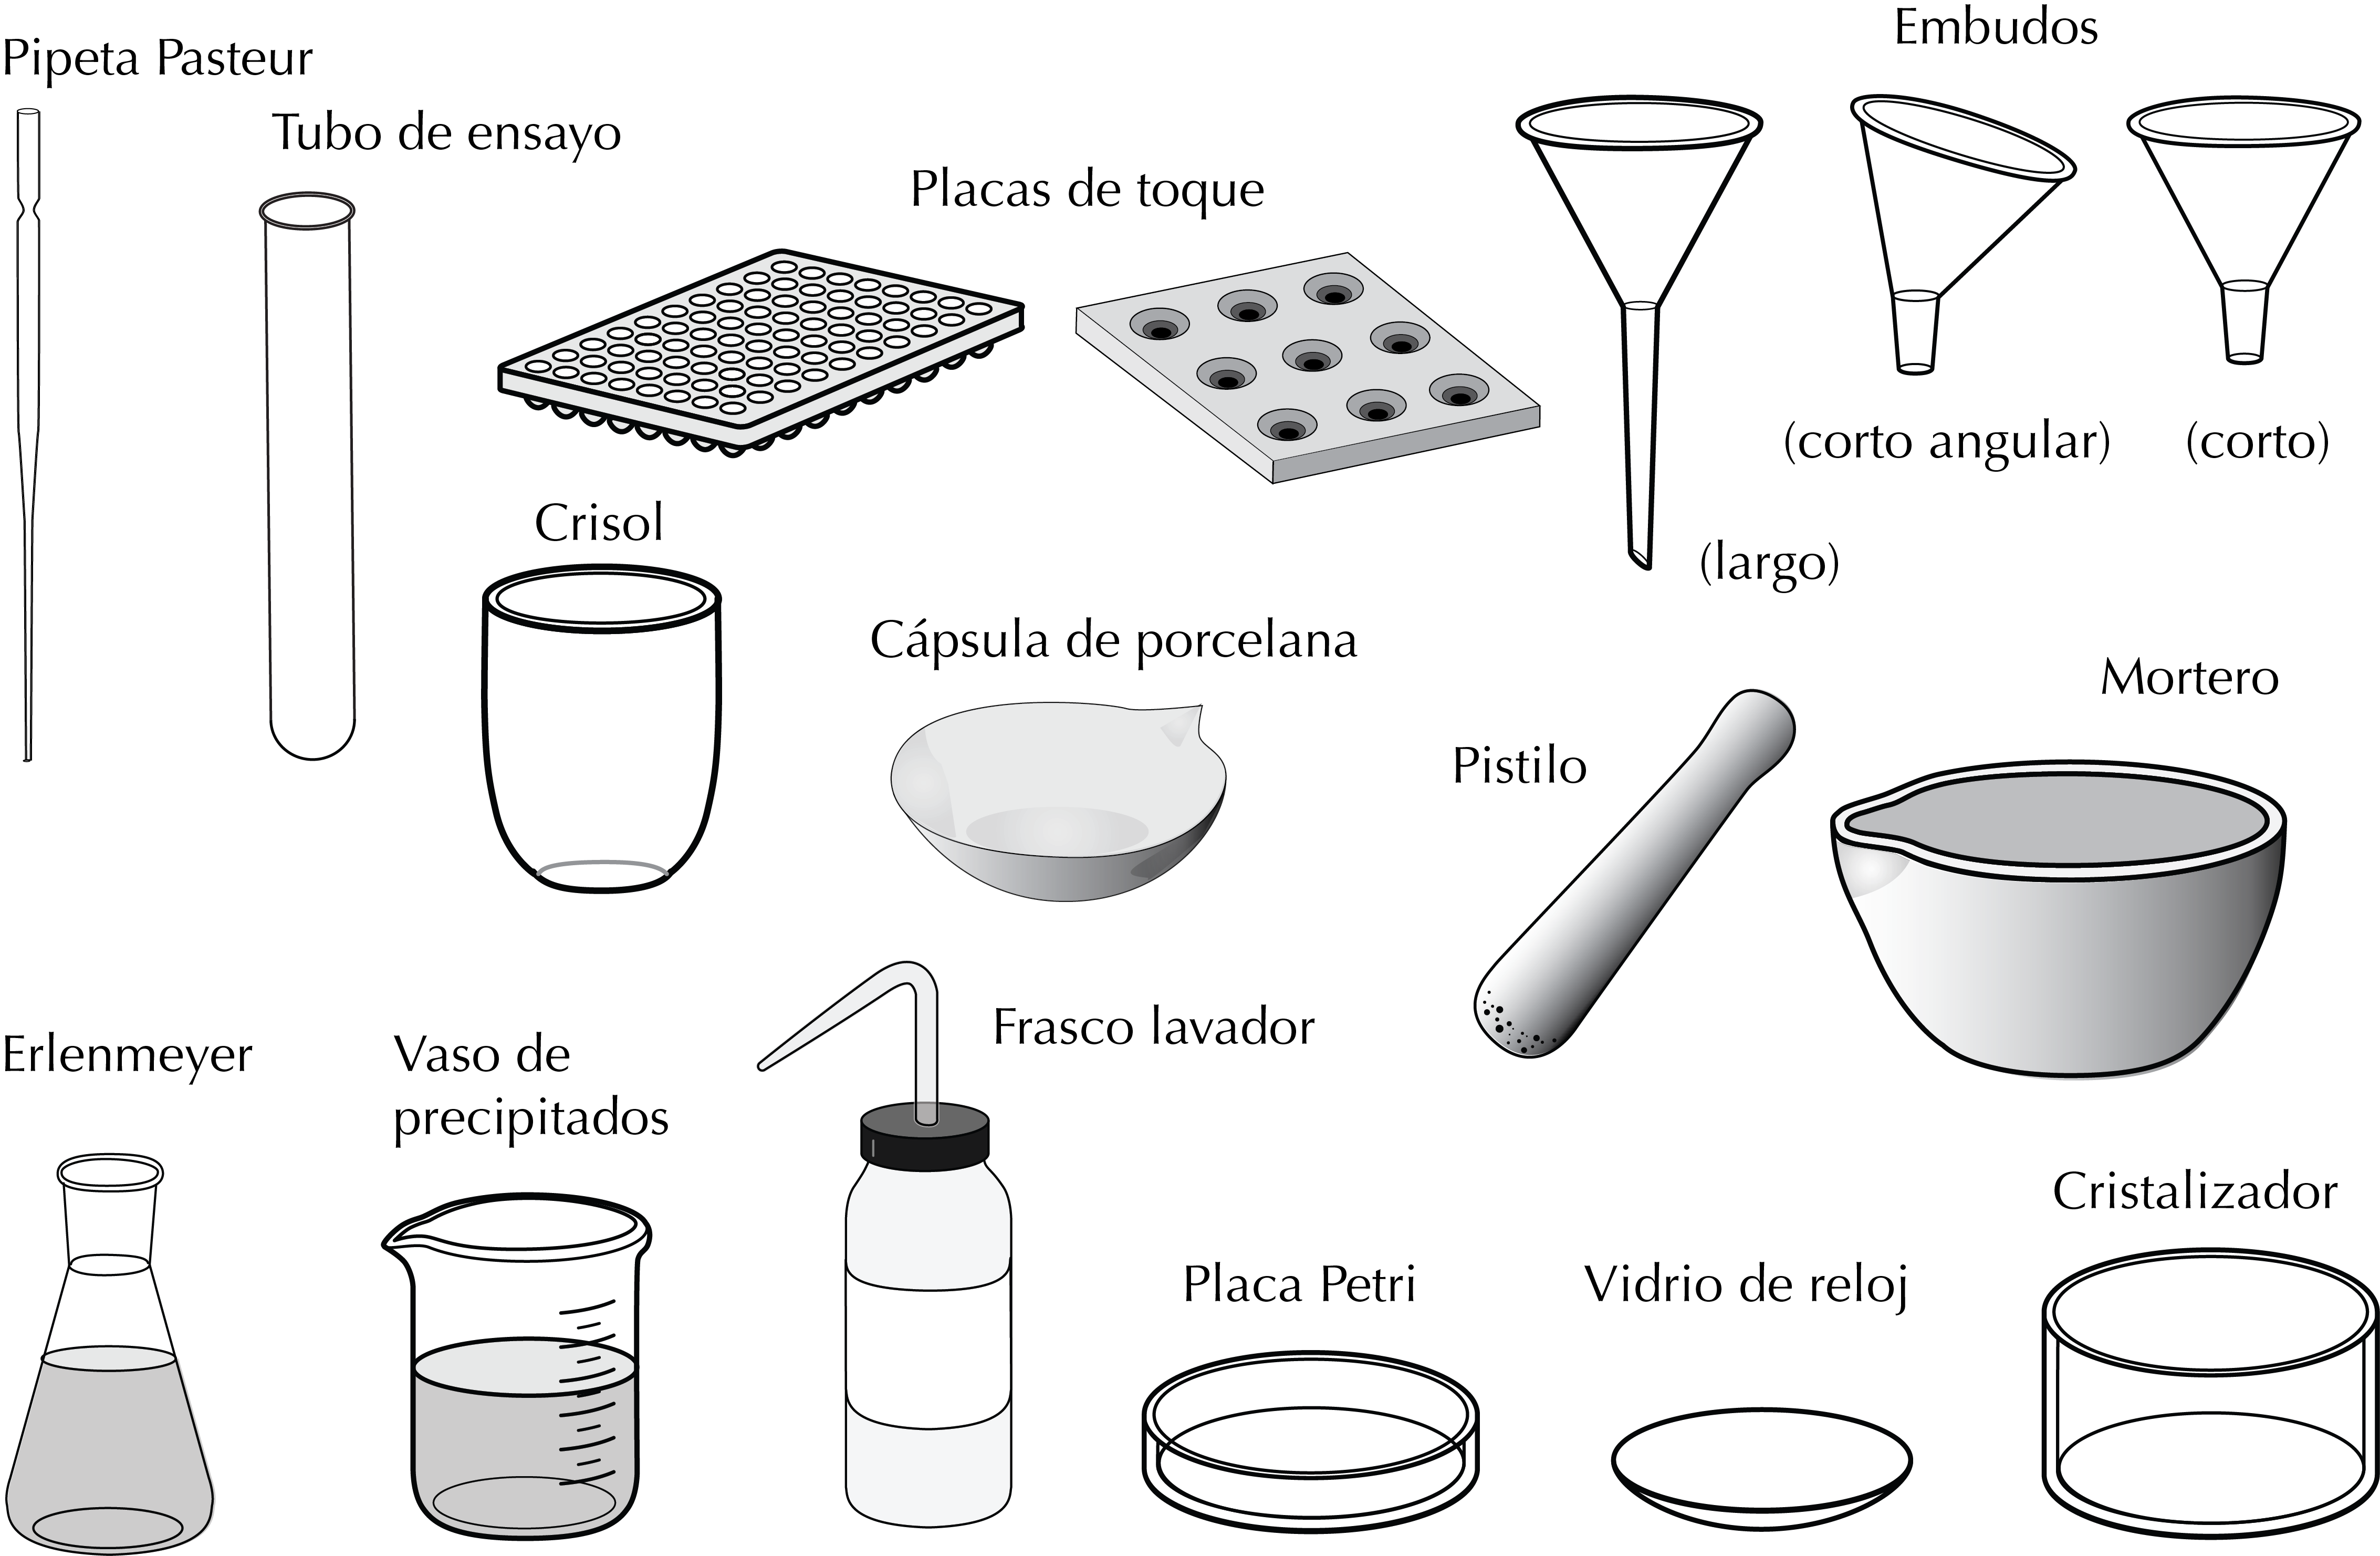 laboratory glassware - Petri dish - porcelain capsules - crystallizing dish - conical funnel - Erlenmeyer flask - Beaker - washing bottle - mortar pestle - touch plate - plugs